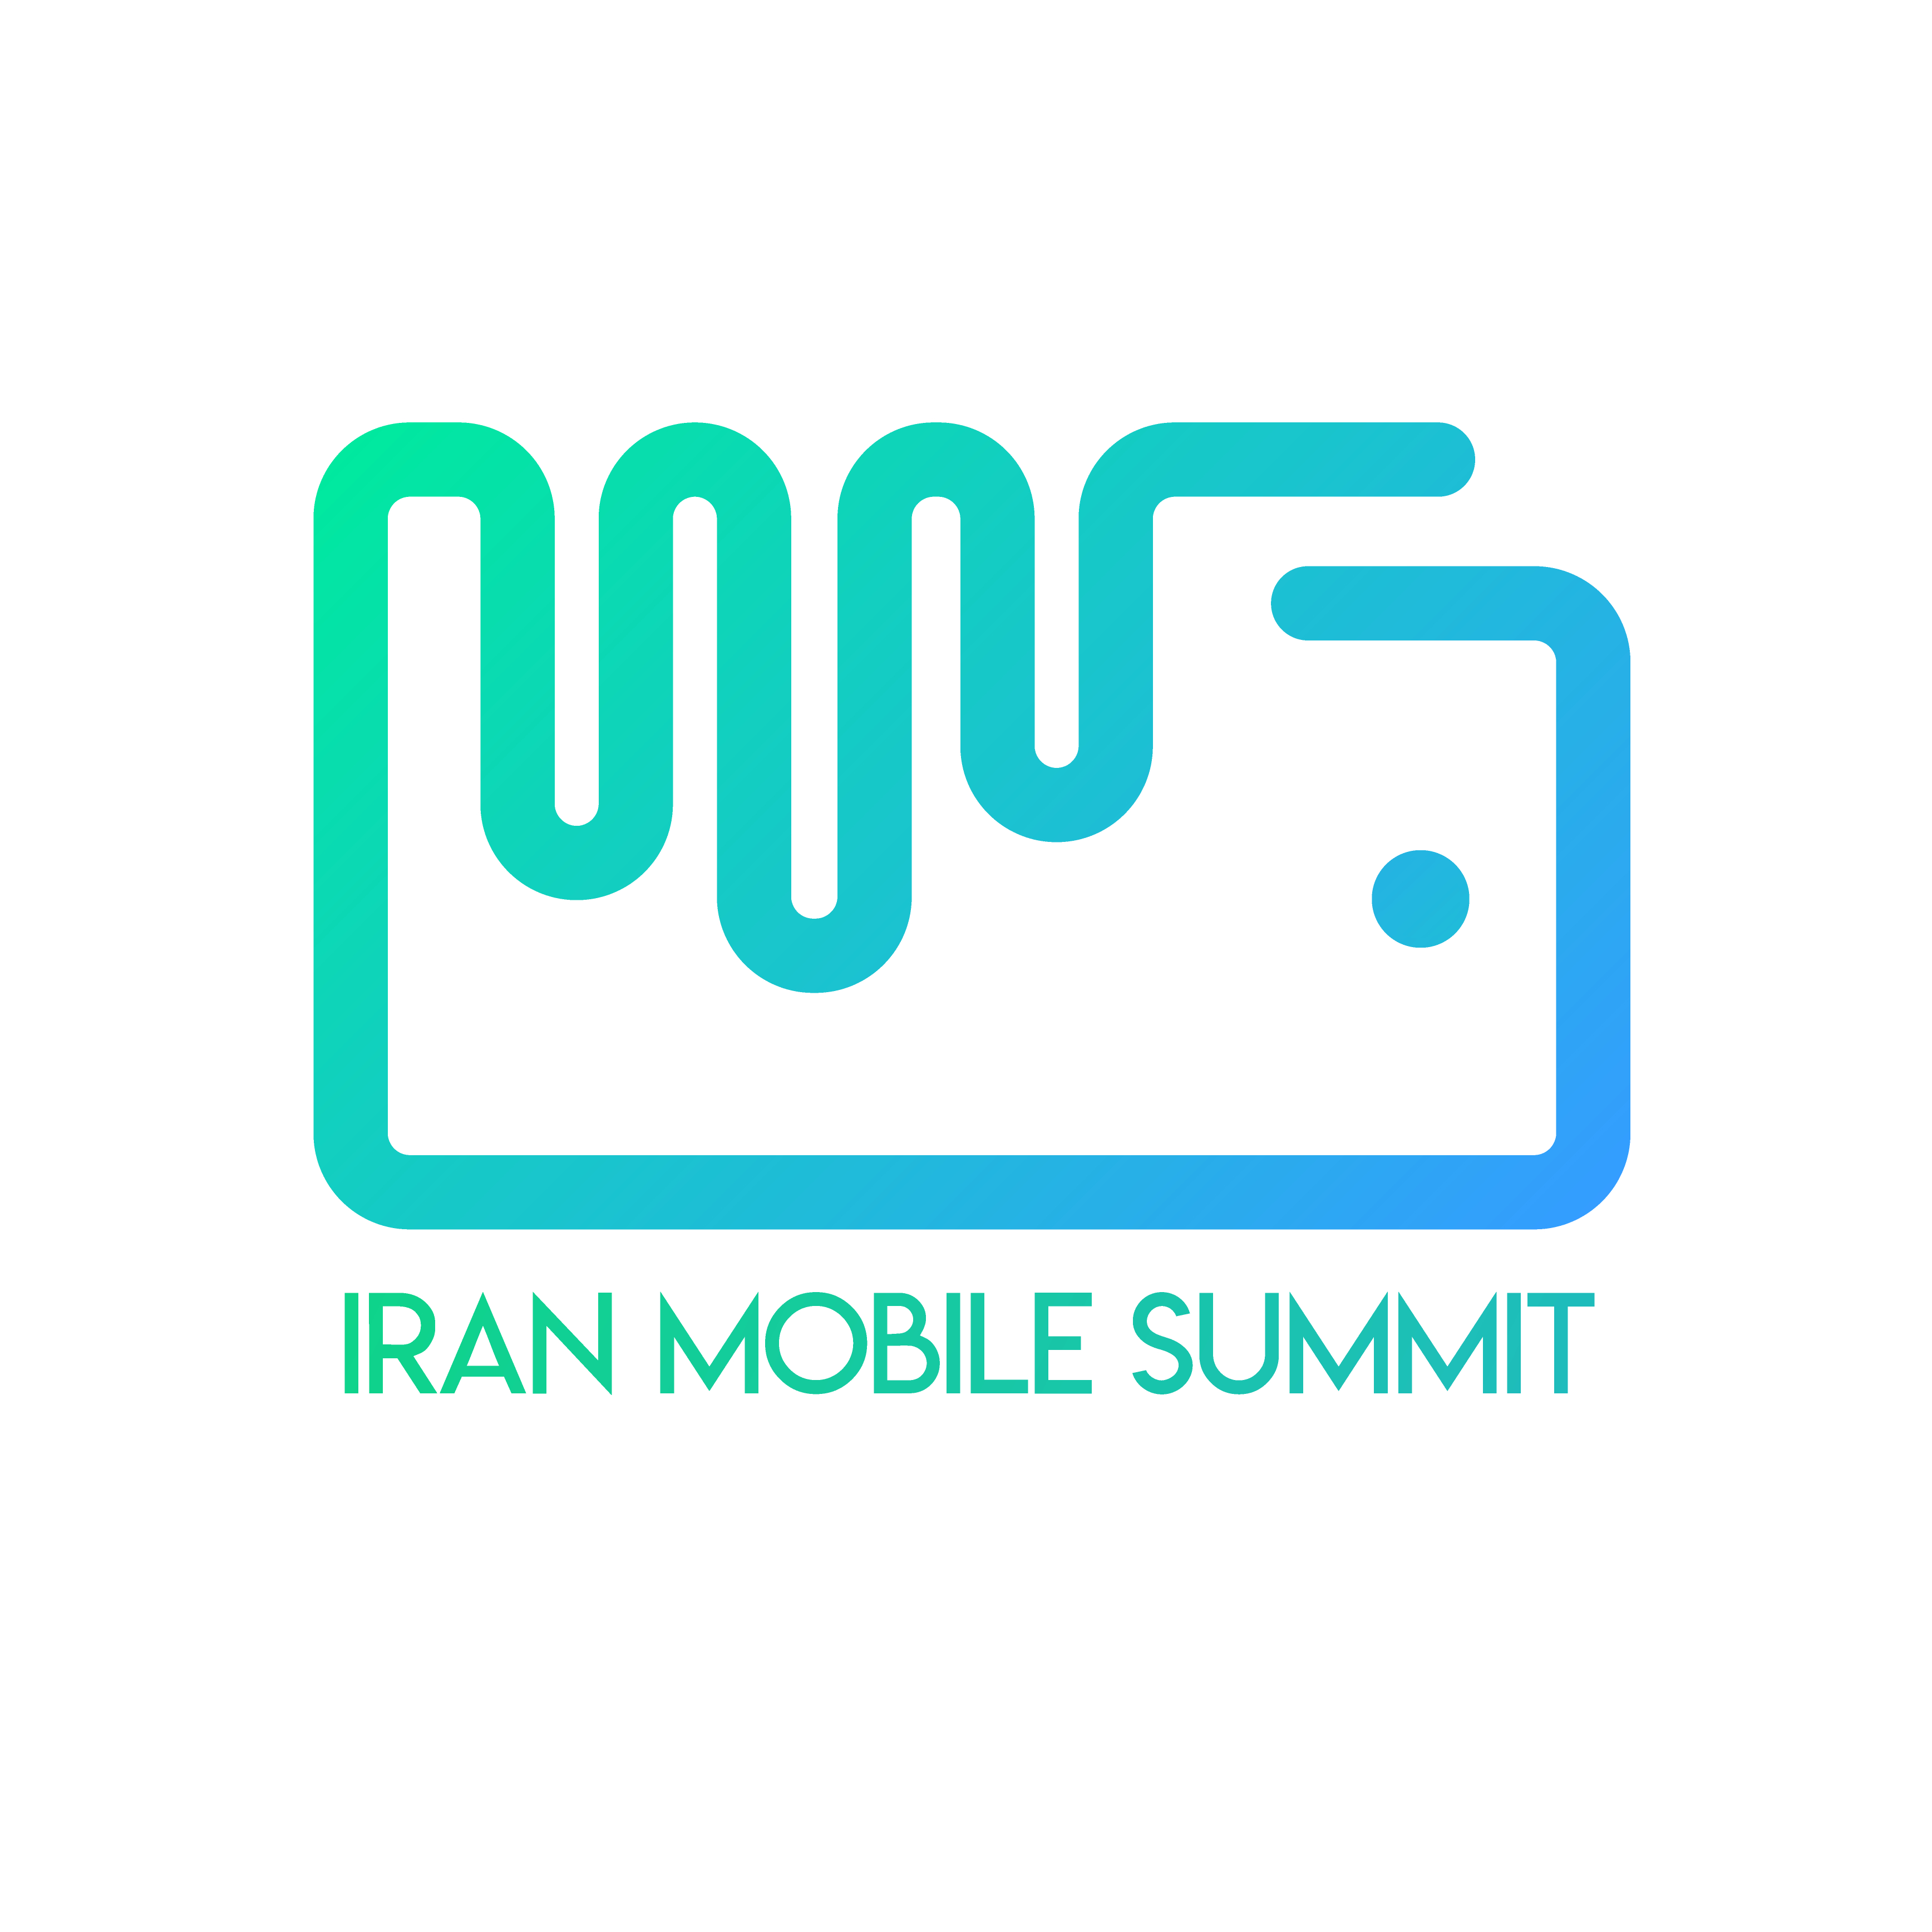 Iran Mobile Summit